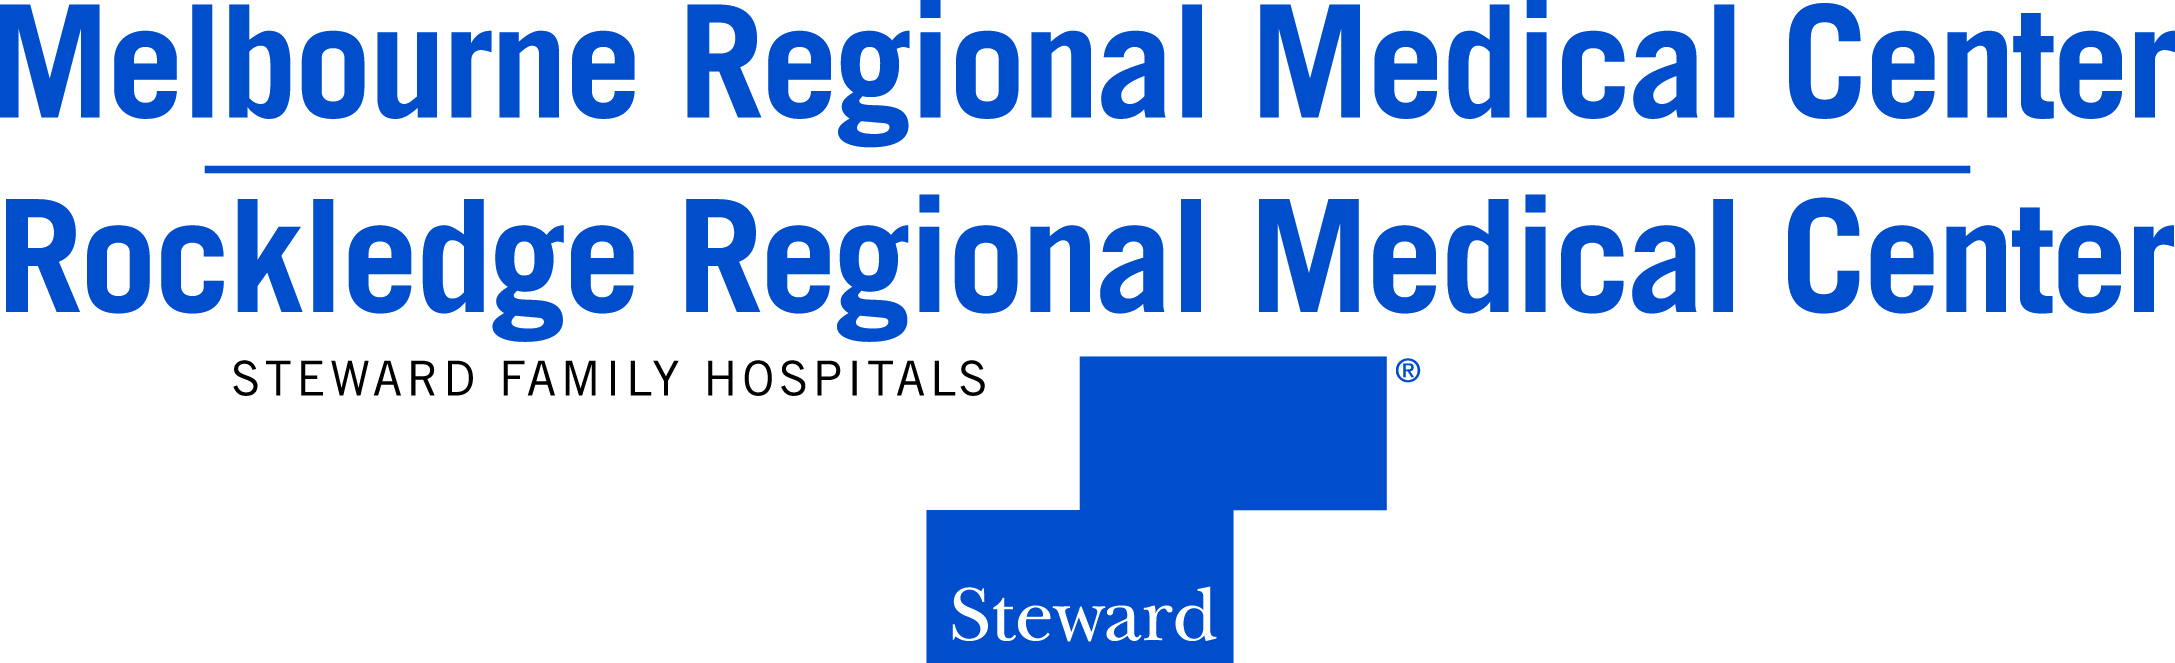 Steward - Melbourne Regional Medical Center